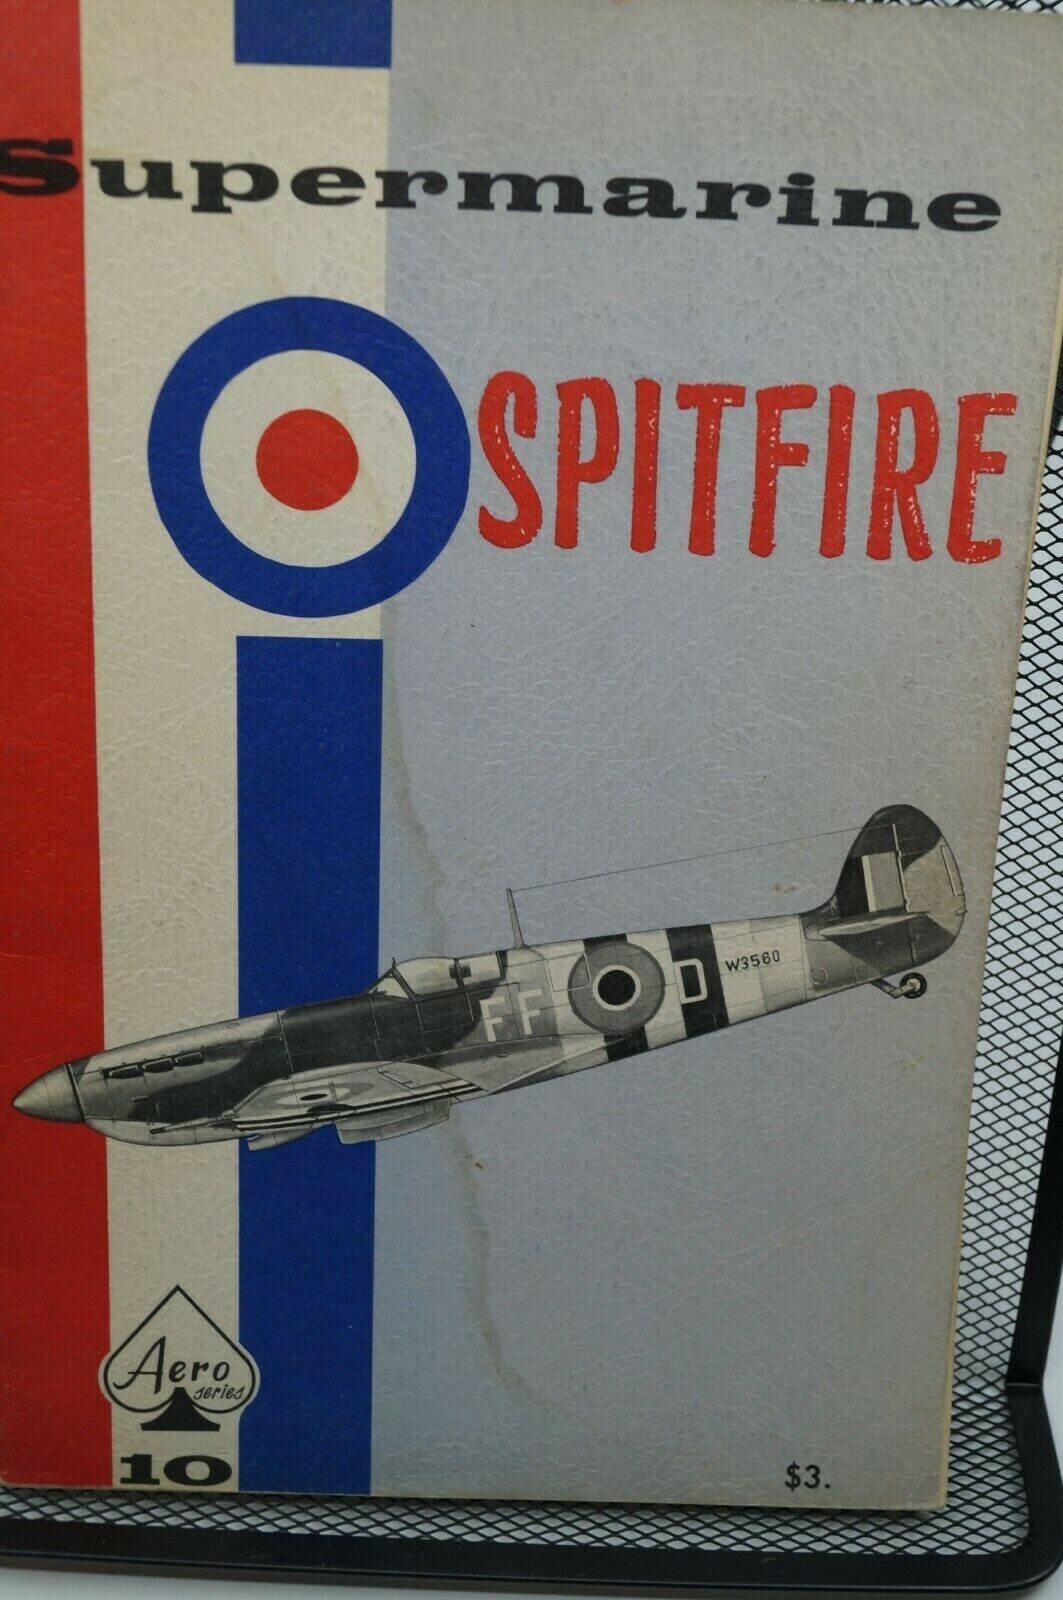 WW2 British RAF Supermarine Spitfire Aero Series Number 10 Reference Book